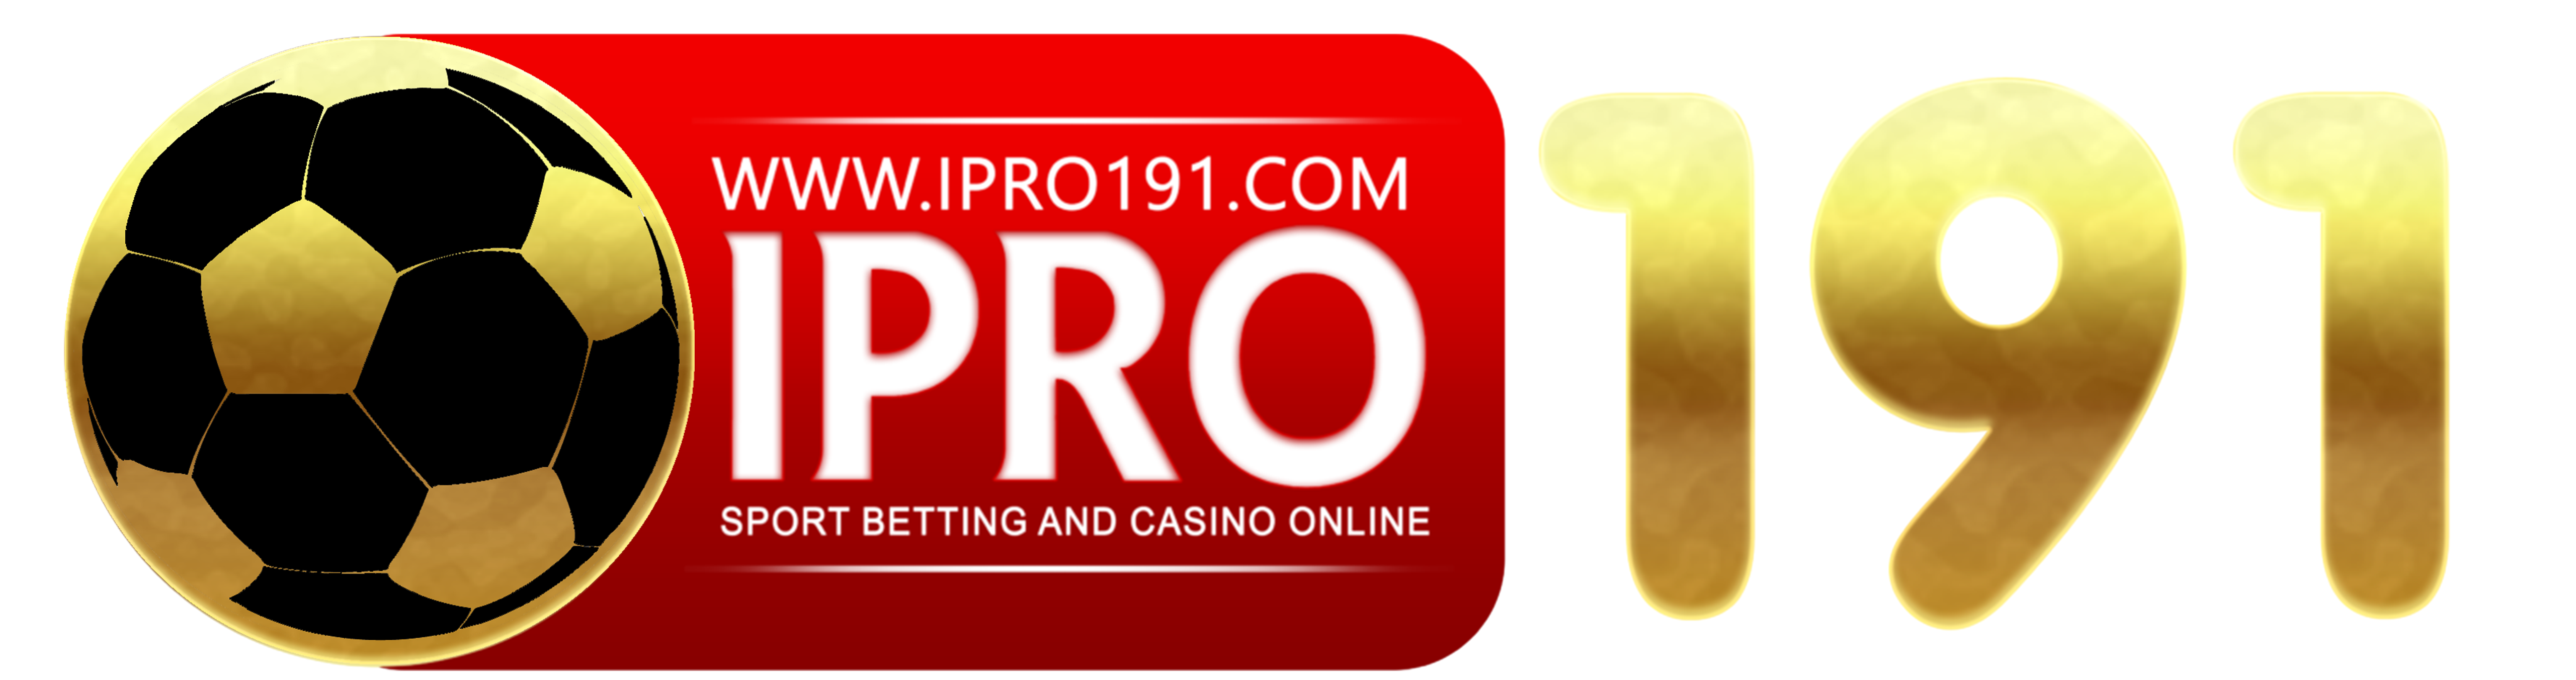 IPROBET-IPRO191 แทงบอลออนไลน์ผ่านเว็บ คาสิโนออนไลน์ เกมออนไลน์